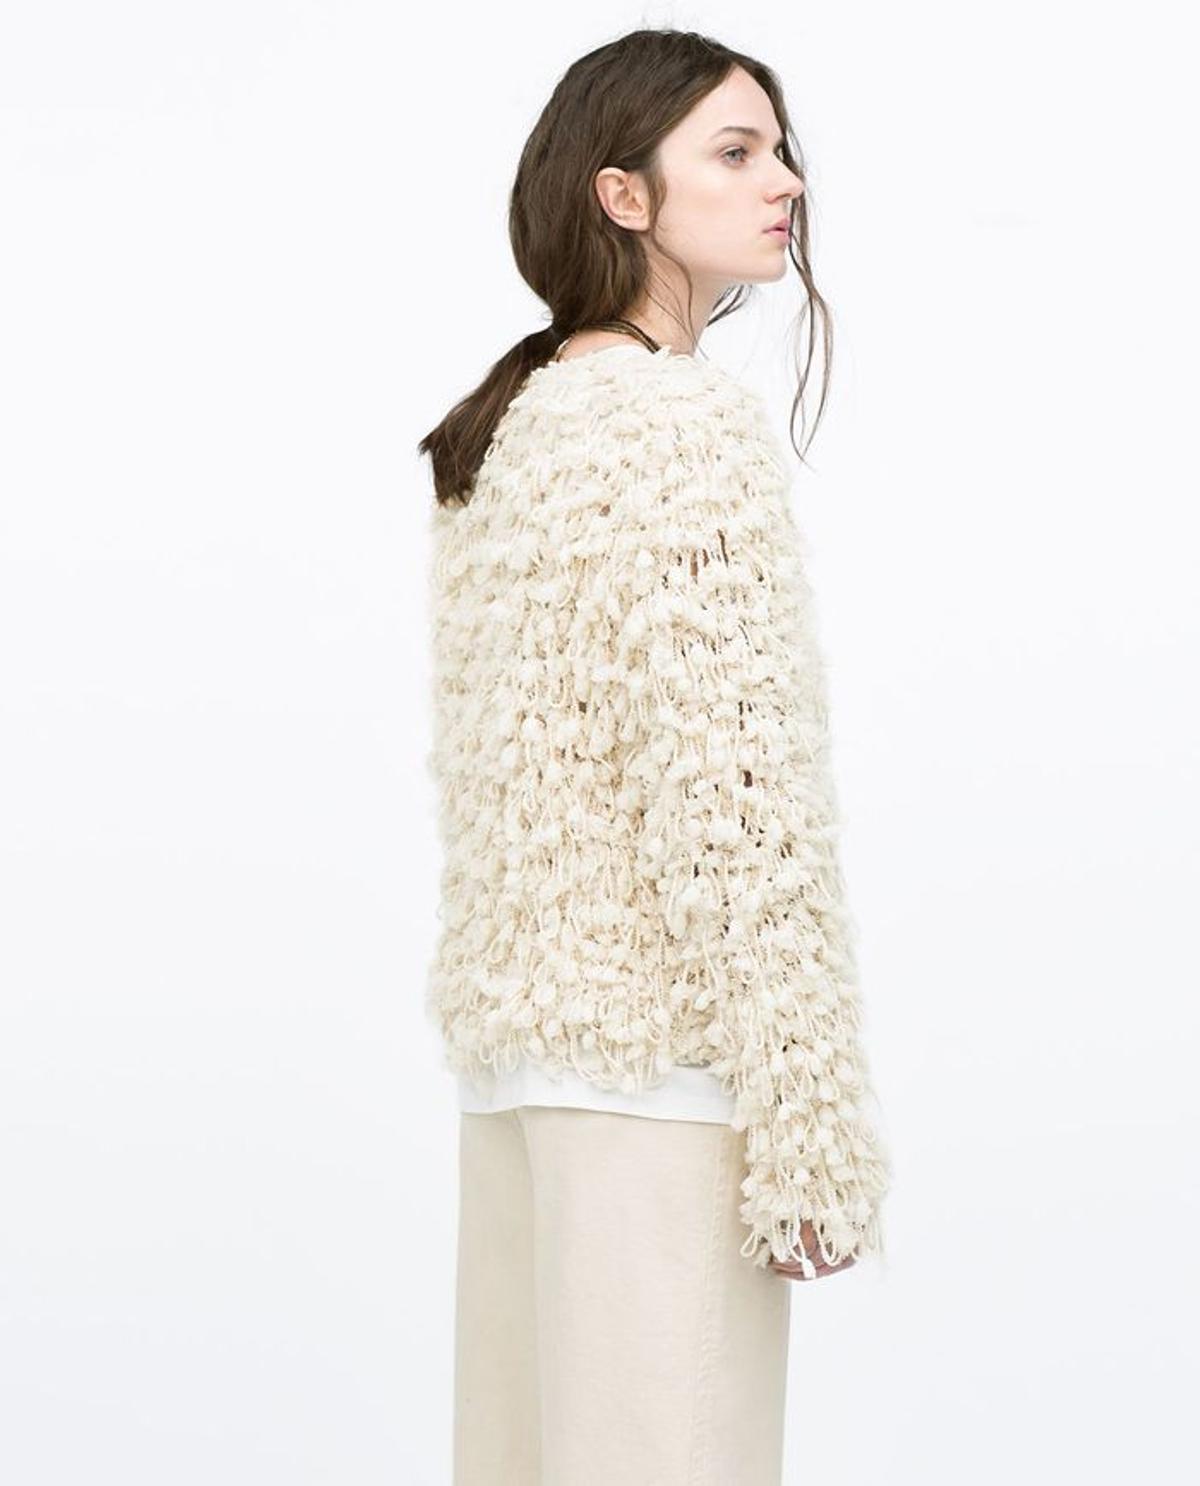 Rebajas Zara 2015, chaqueta